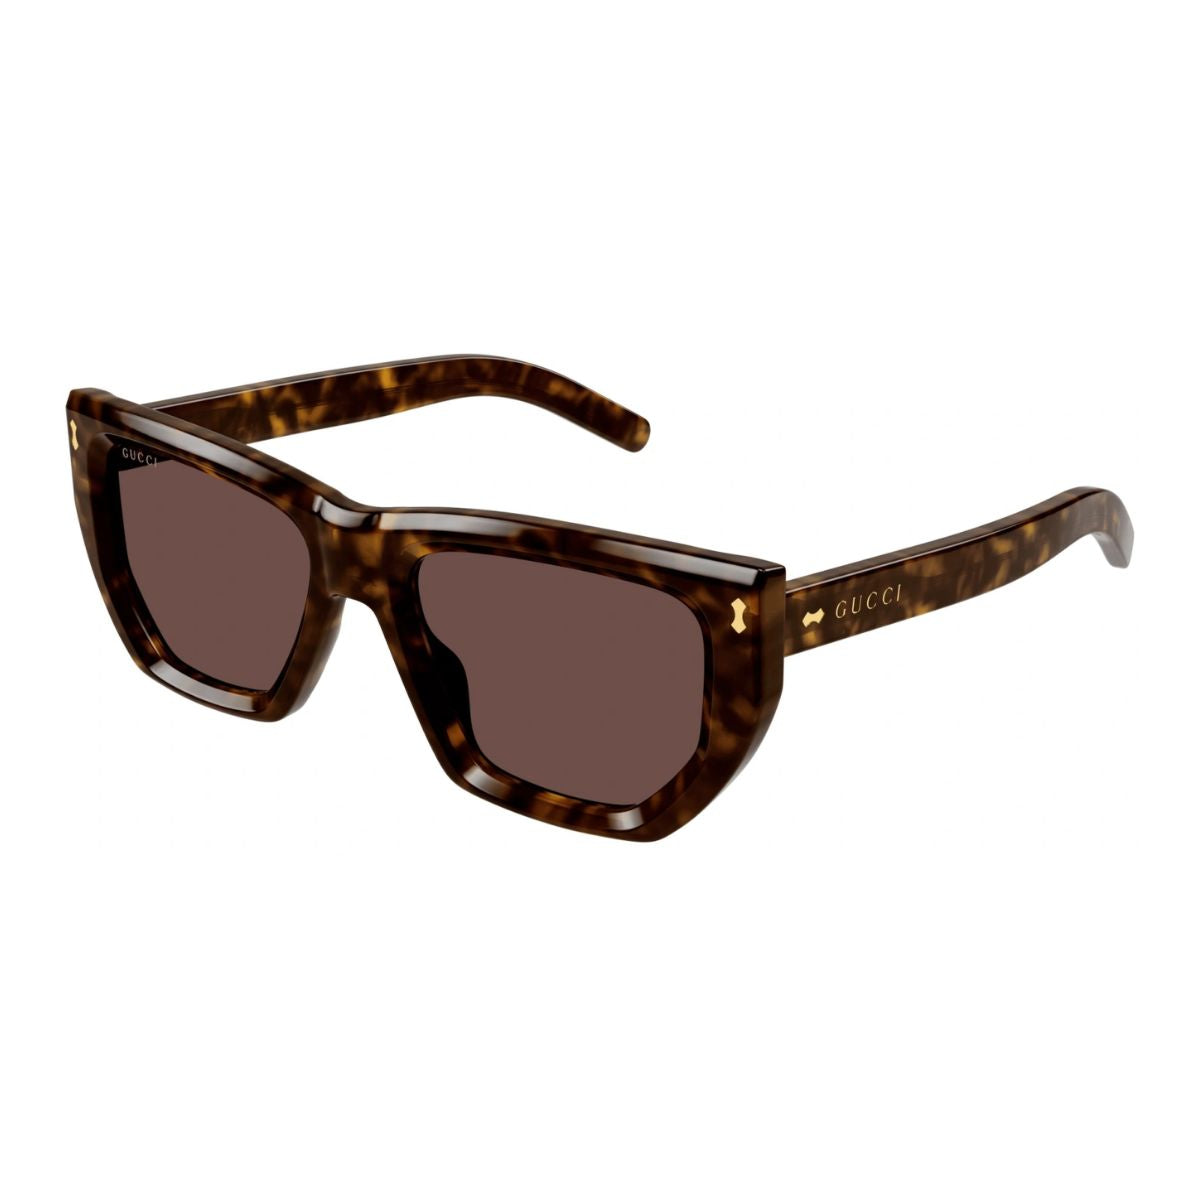 "Shop Gucci Sunglasses GG1502S 002 at Optorium"